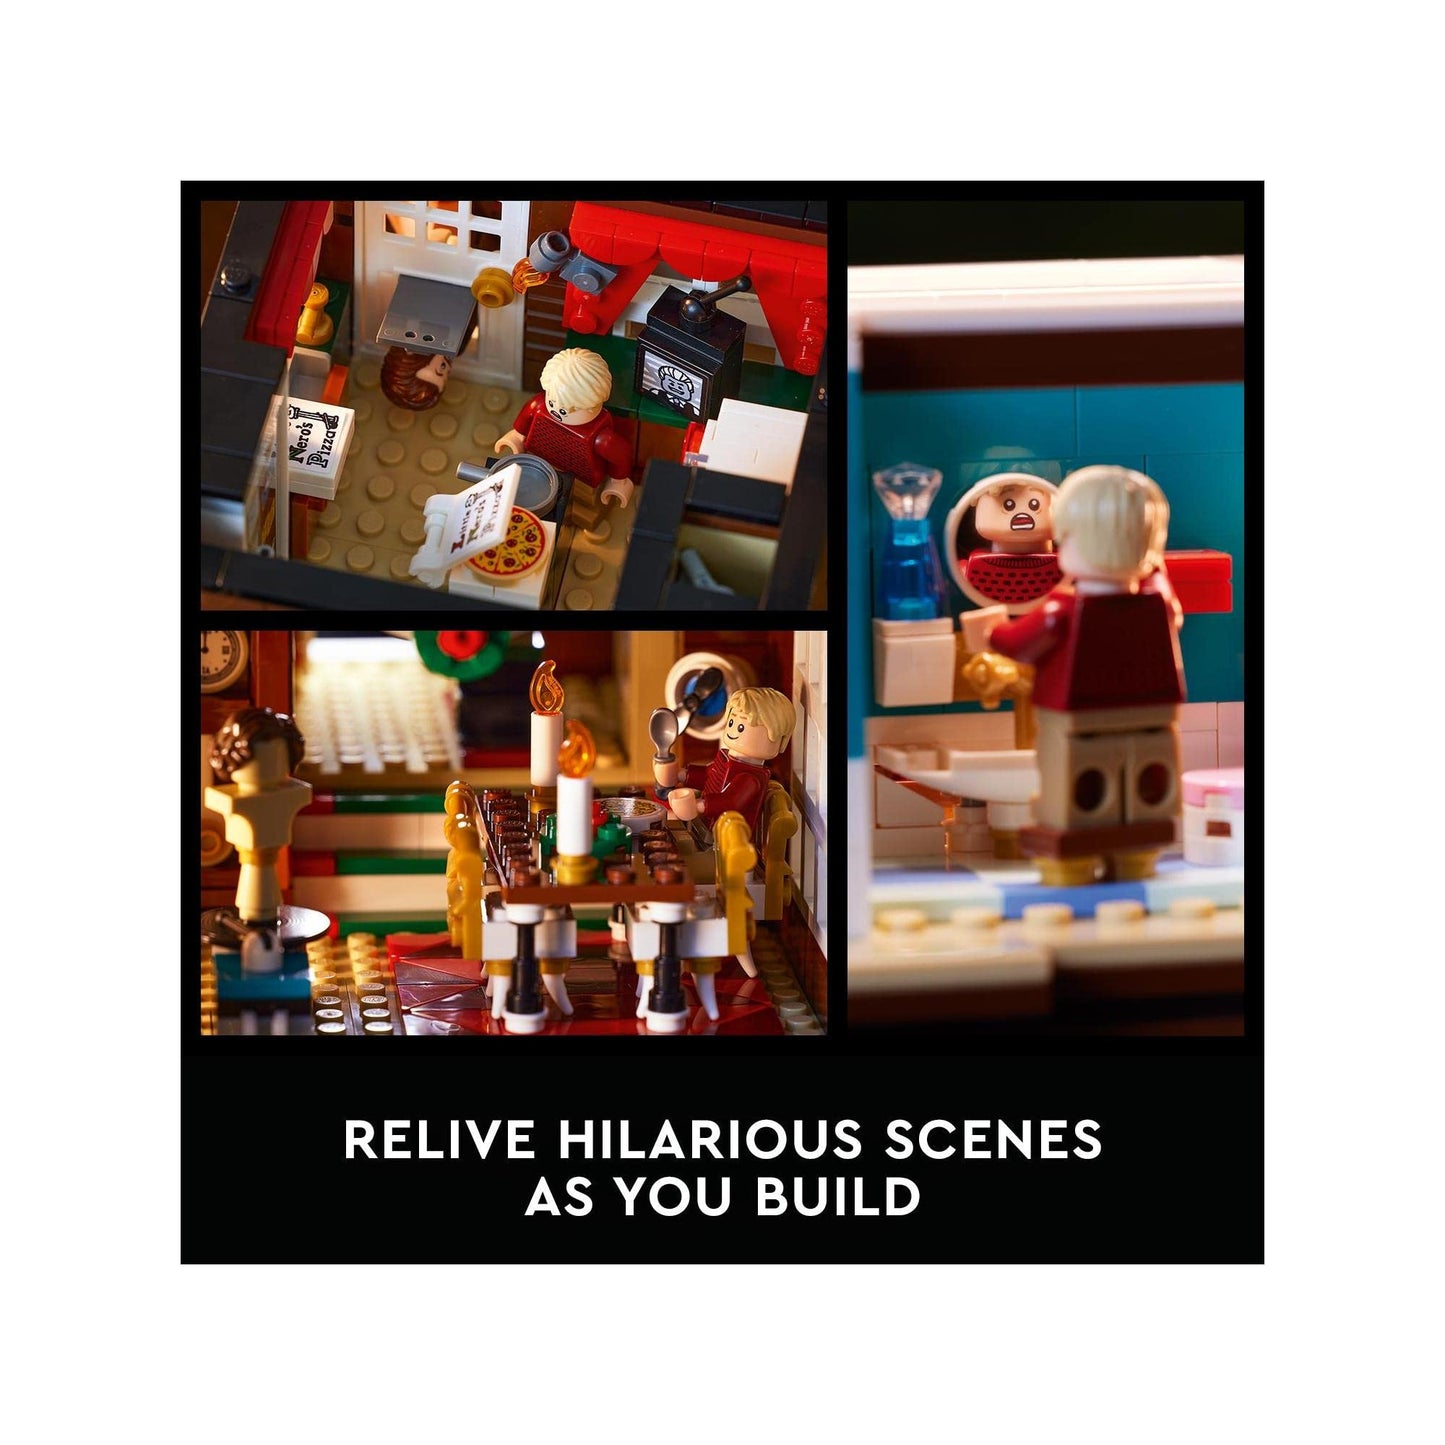 LEGO Ideas Home Alone McCallisters’ House 21330